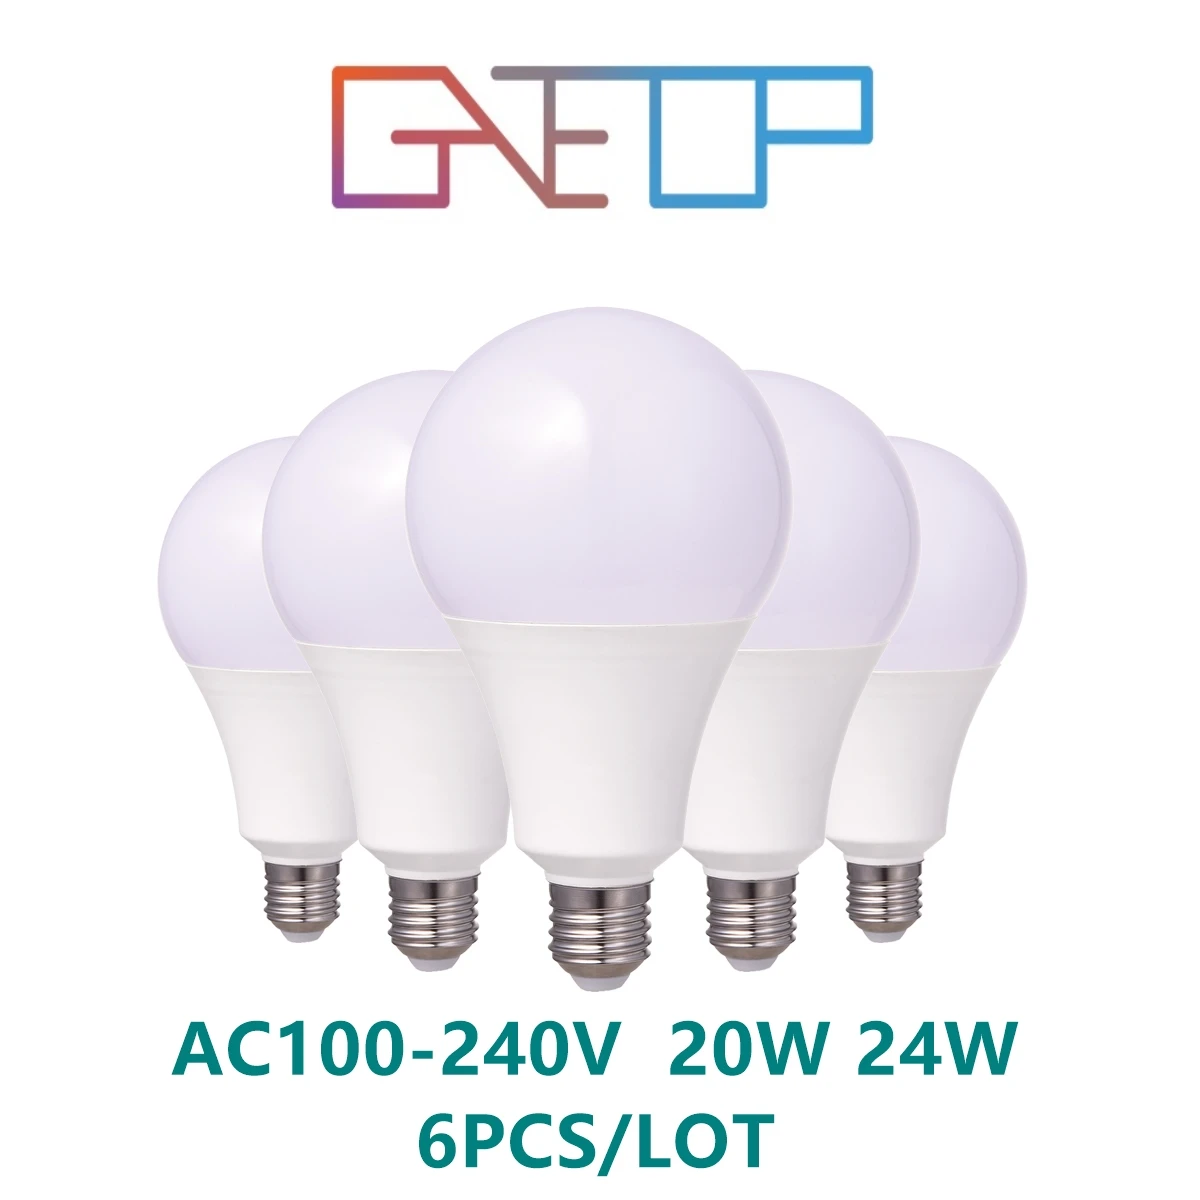 

6PCS/LOT LED high power bulb A80 AC100V-240V E27 B22 20W 24W 100LM/W for mall home lighting super bright warm white light